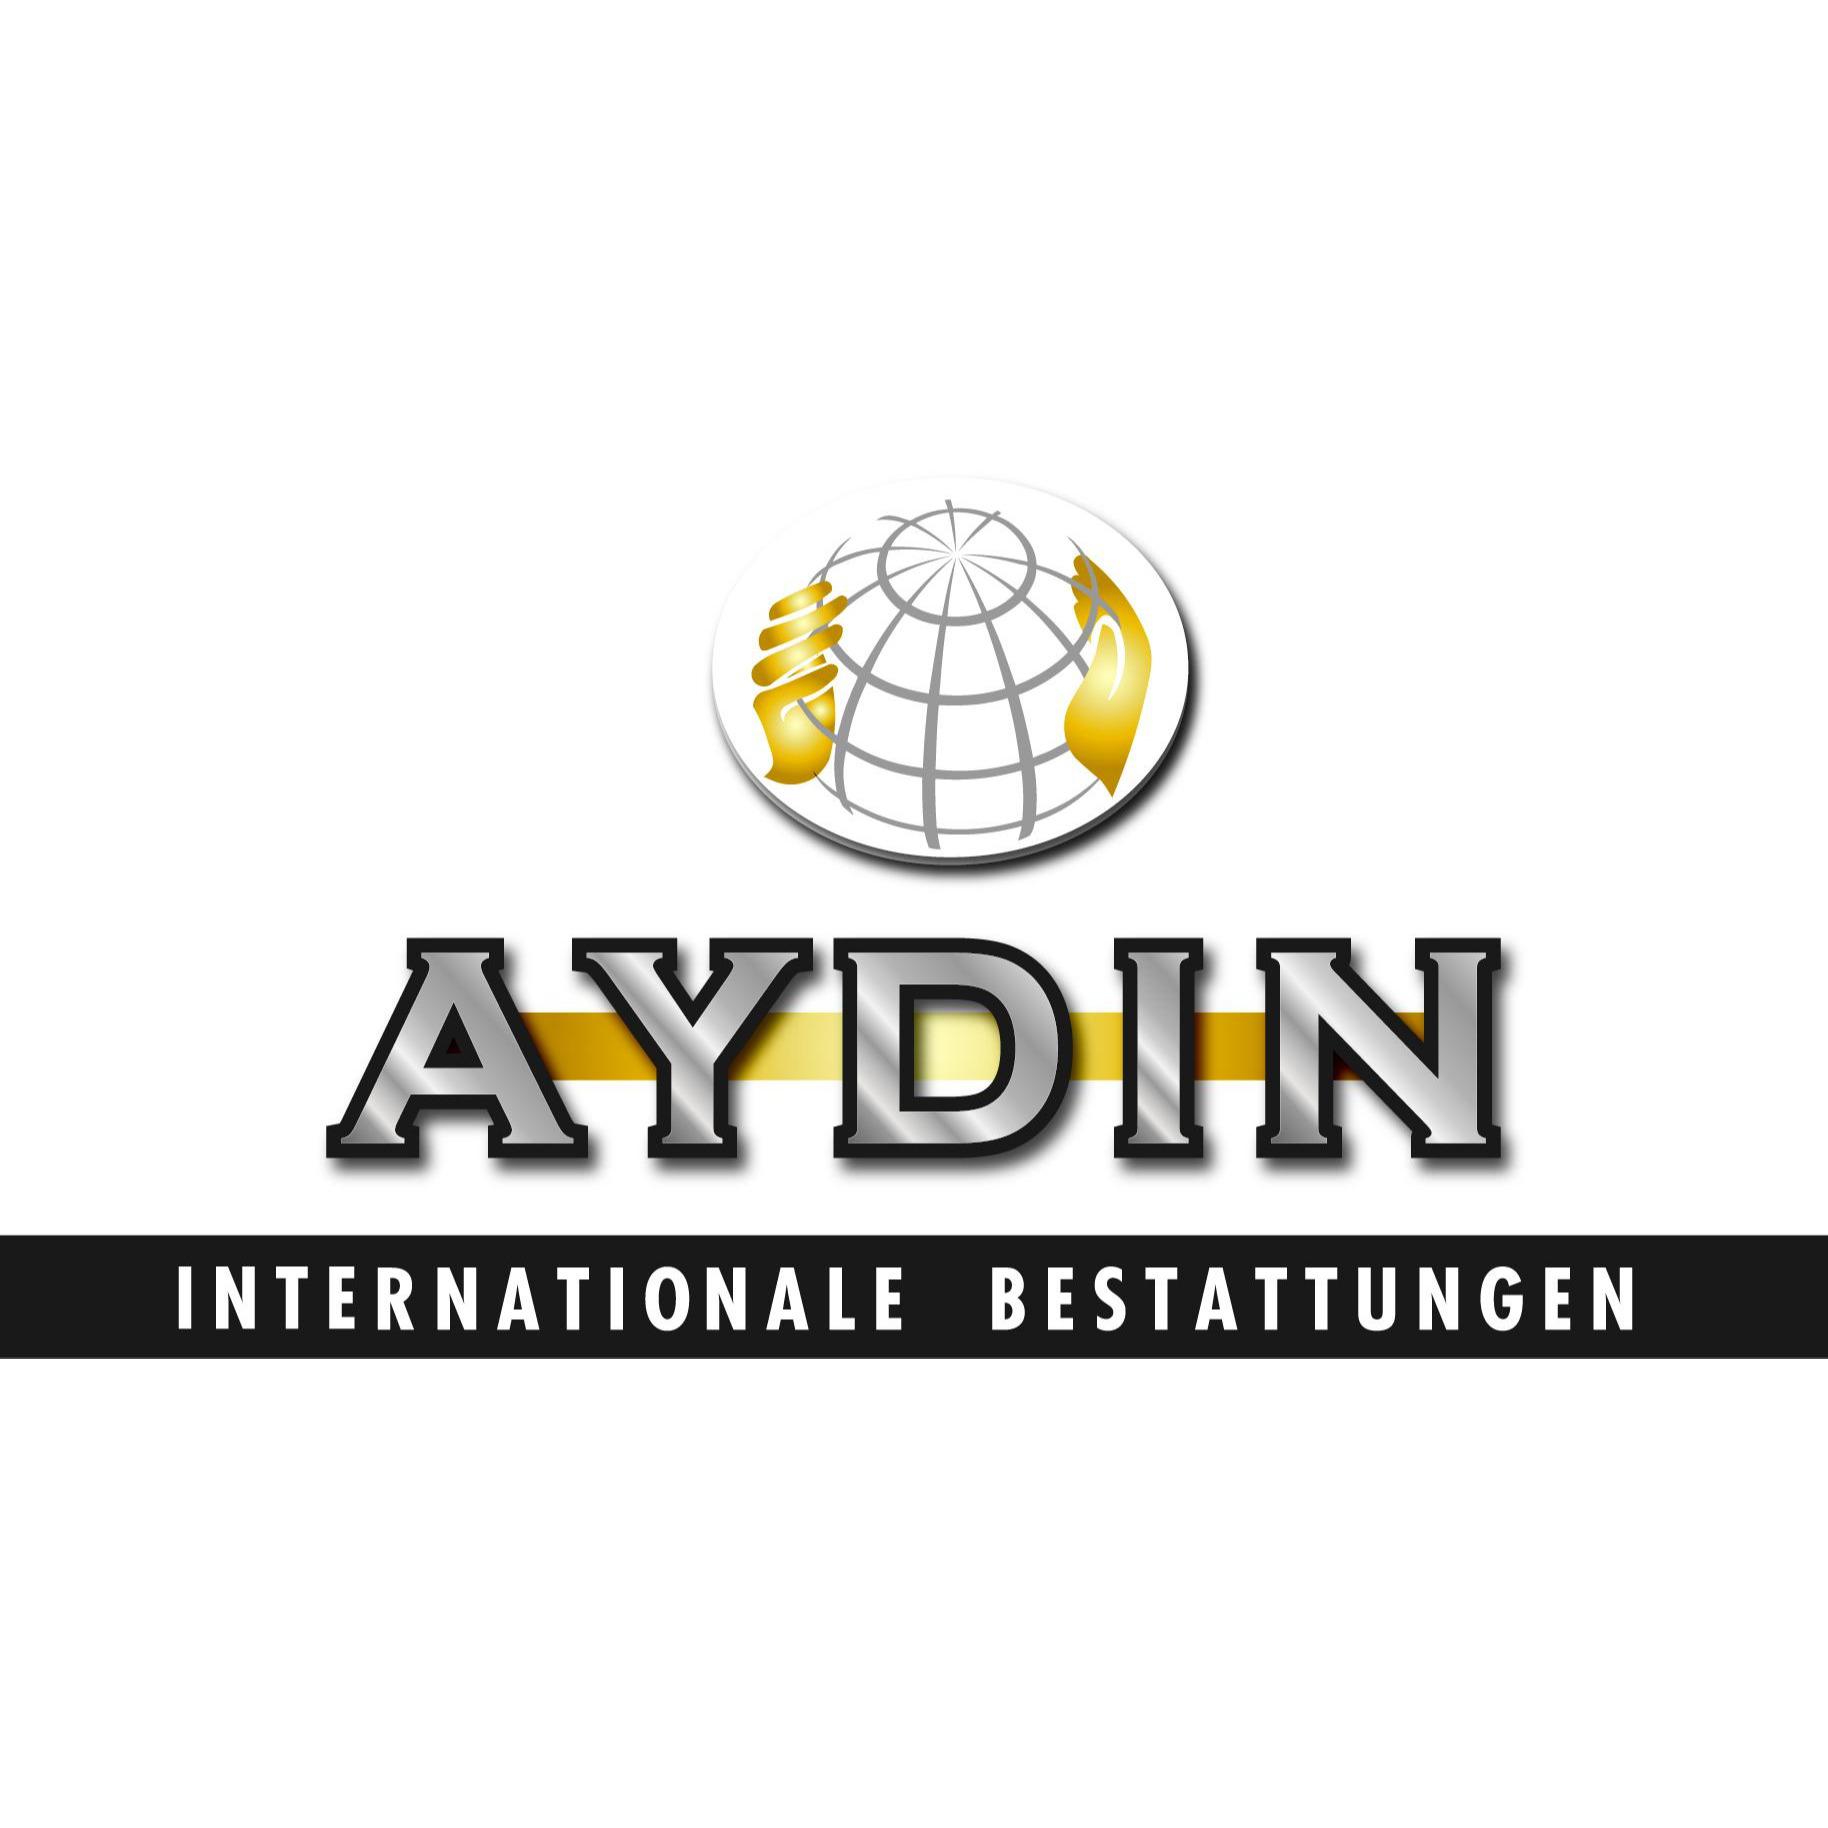 AYDIN Internationale Bestattungen GmbH & Co. KG